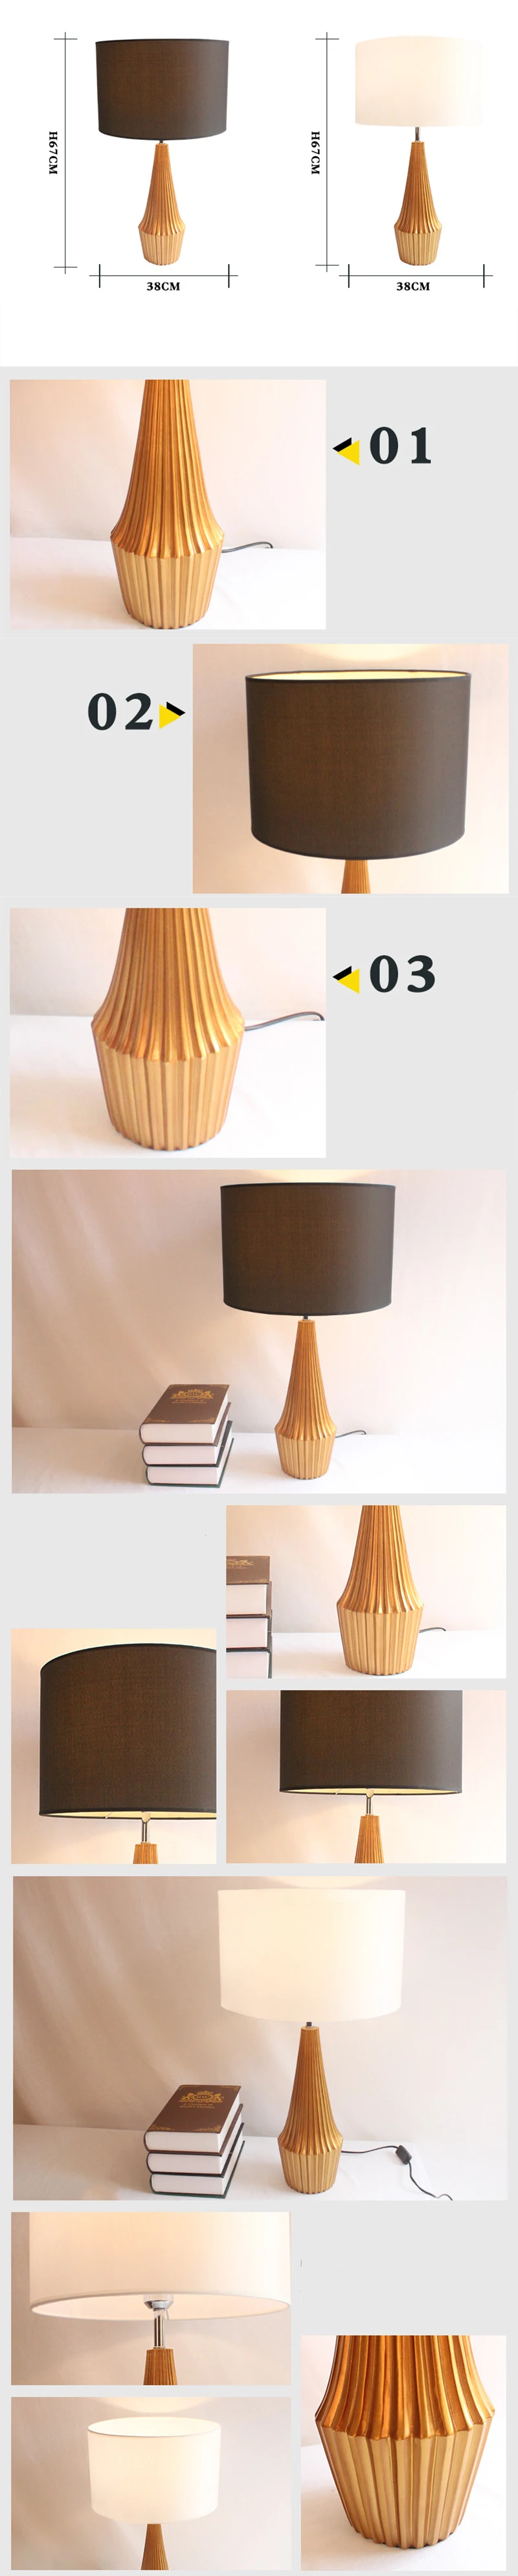 Nordic Modern Wood Grain Iron Led Office Works Reading Book Desk Table Lamp Light for Office Living Room Bedside Study Indoor